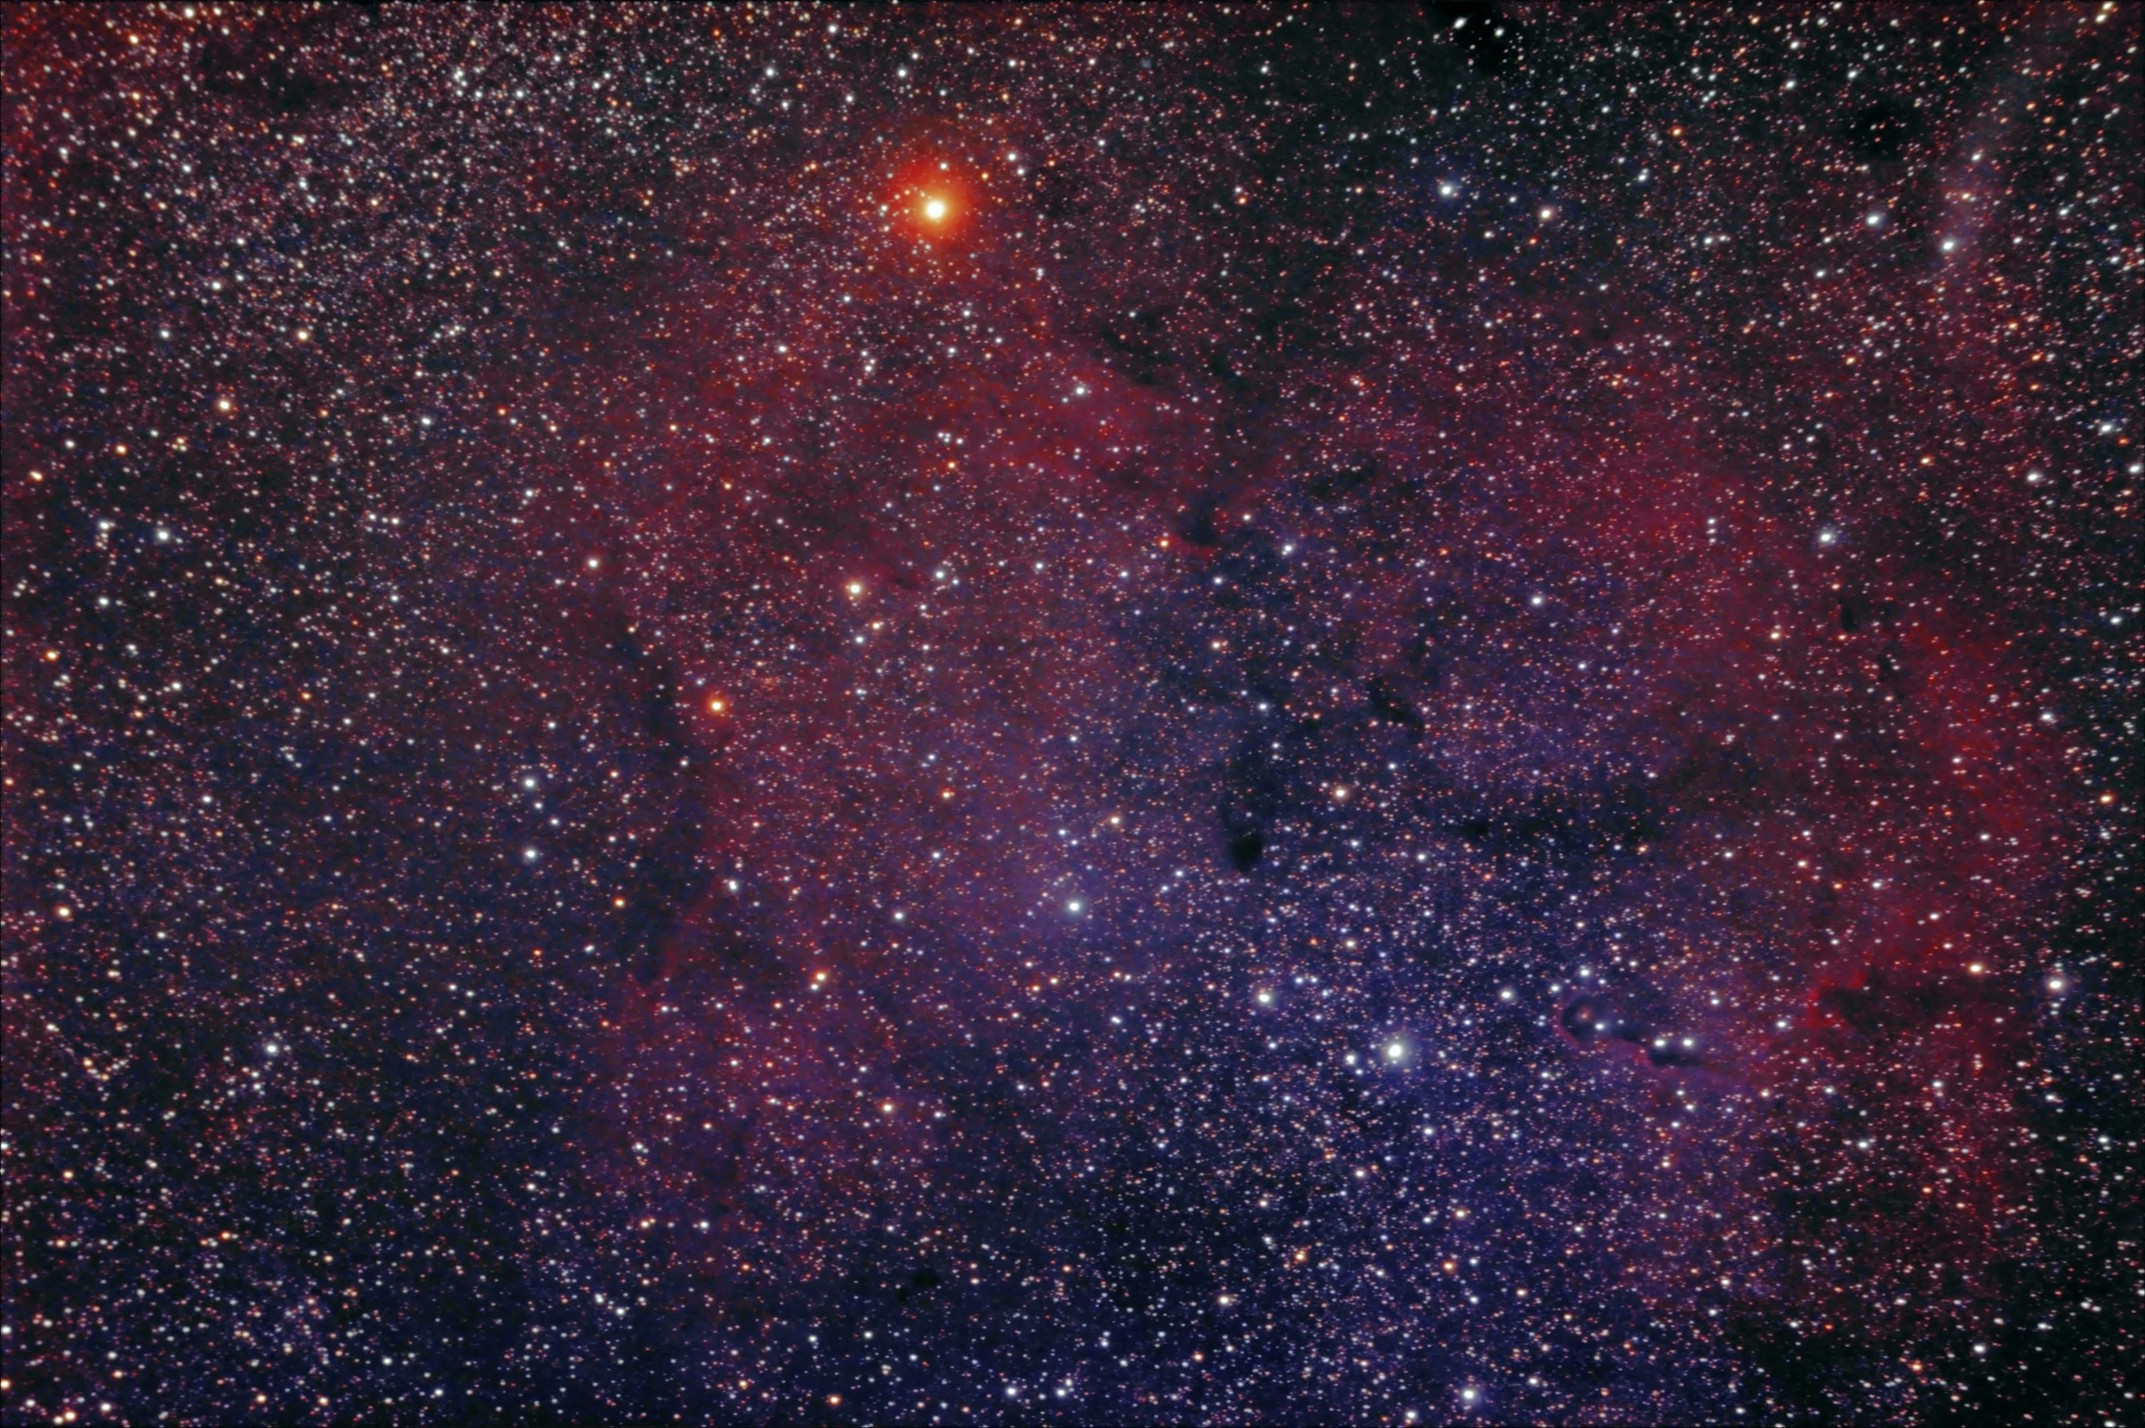 The Garnet Star and Elephant's Trunk Nebula